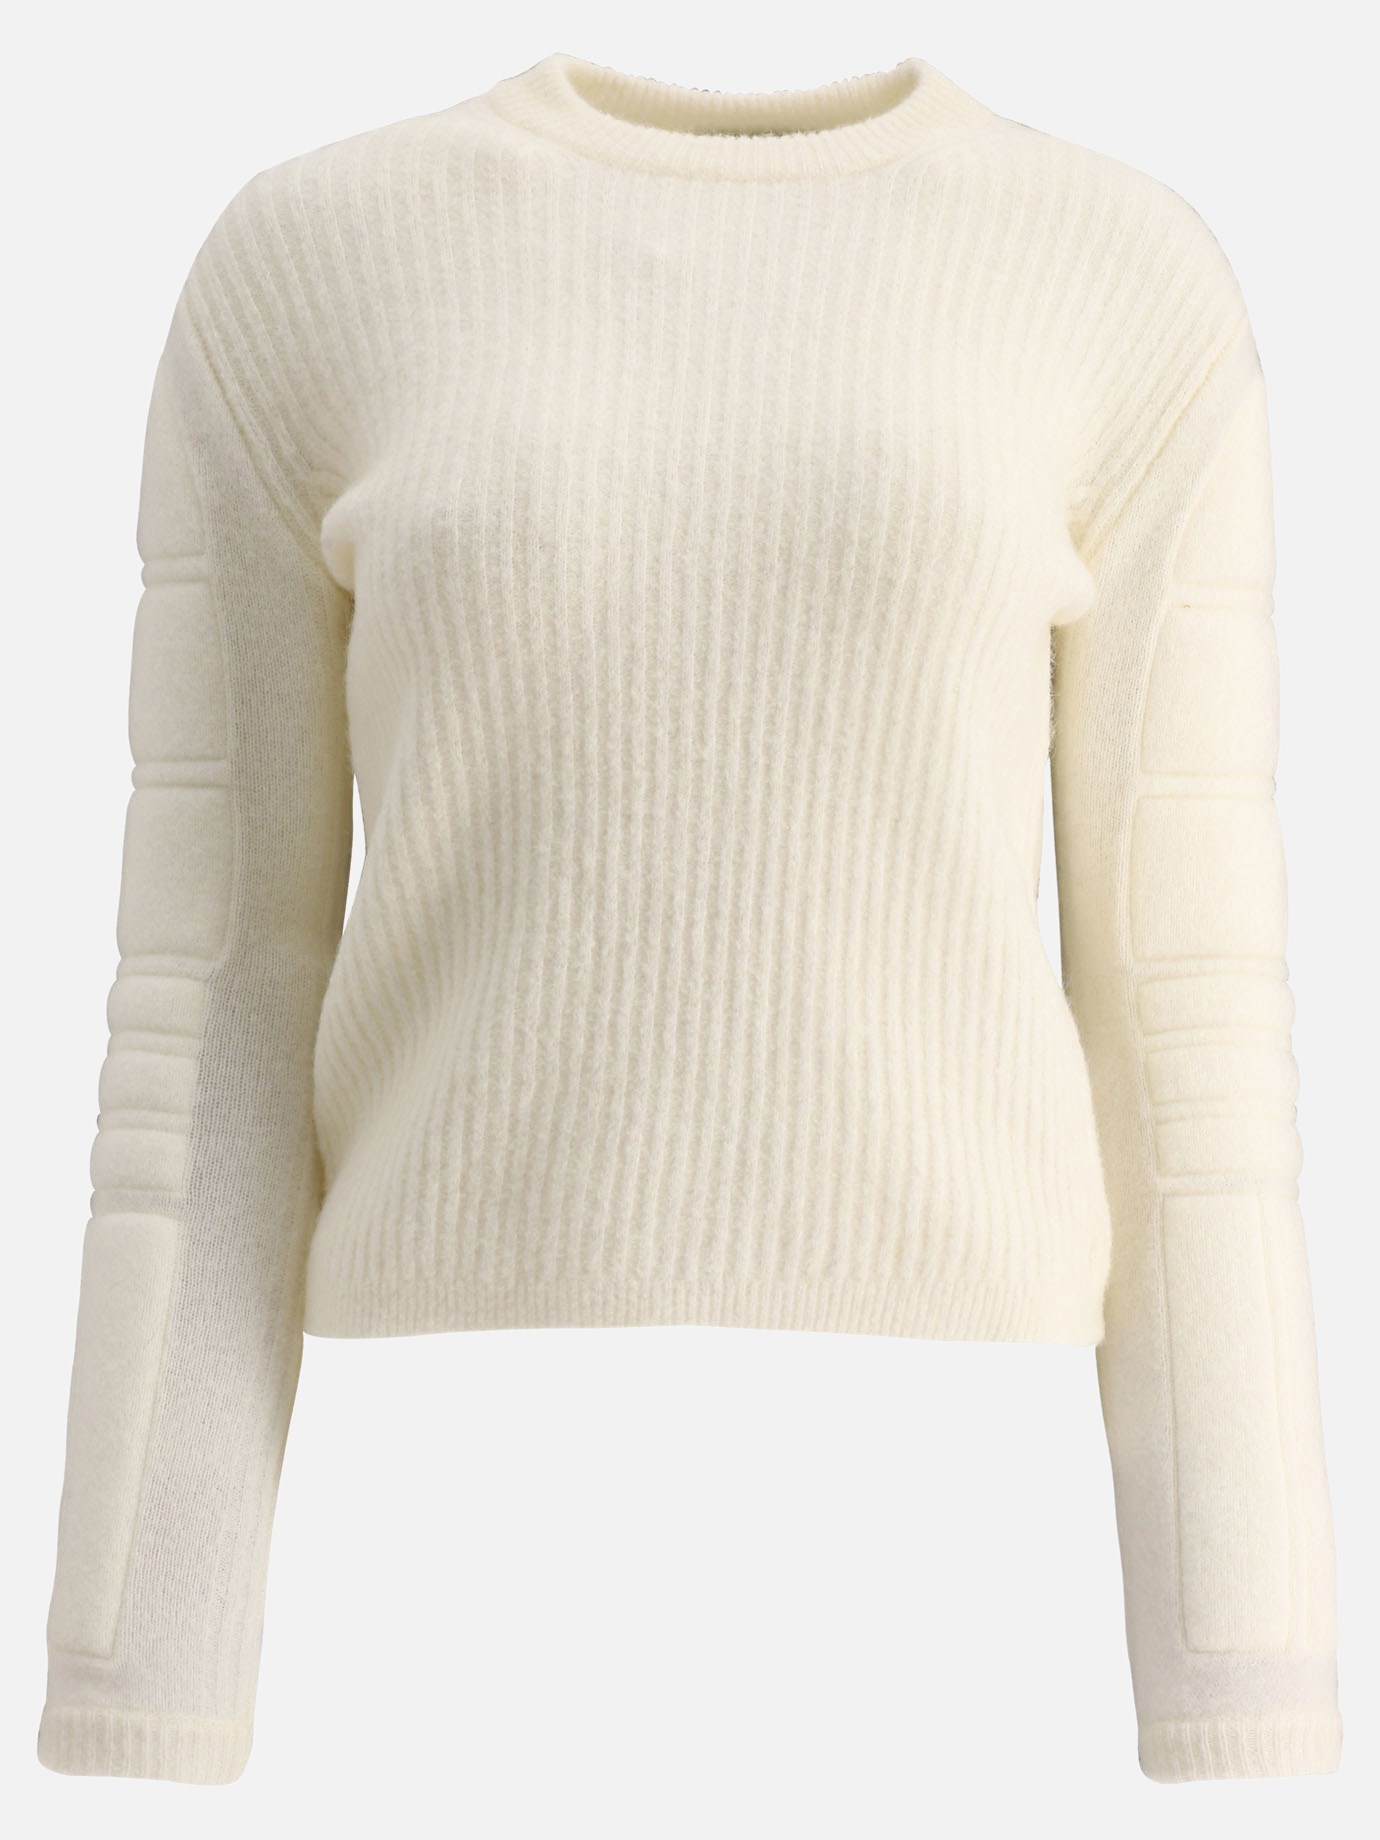  Smirne  sweaterby Max Mara - 0